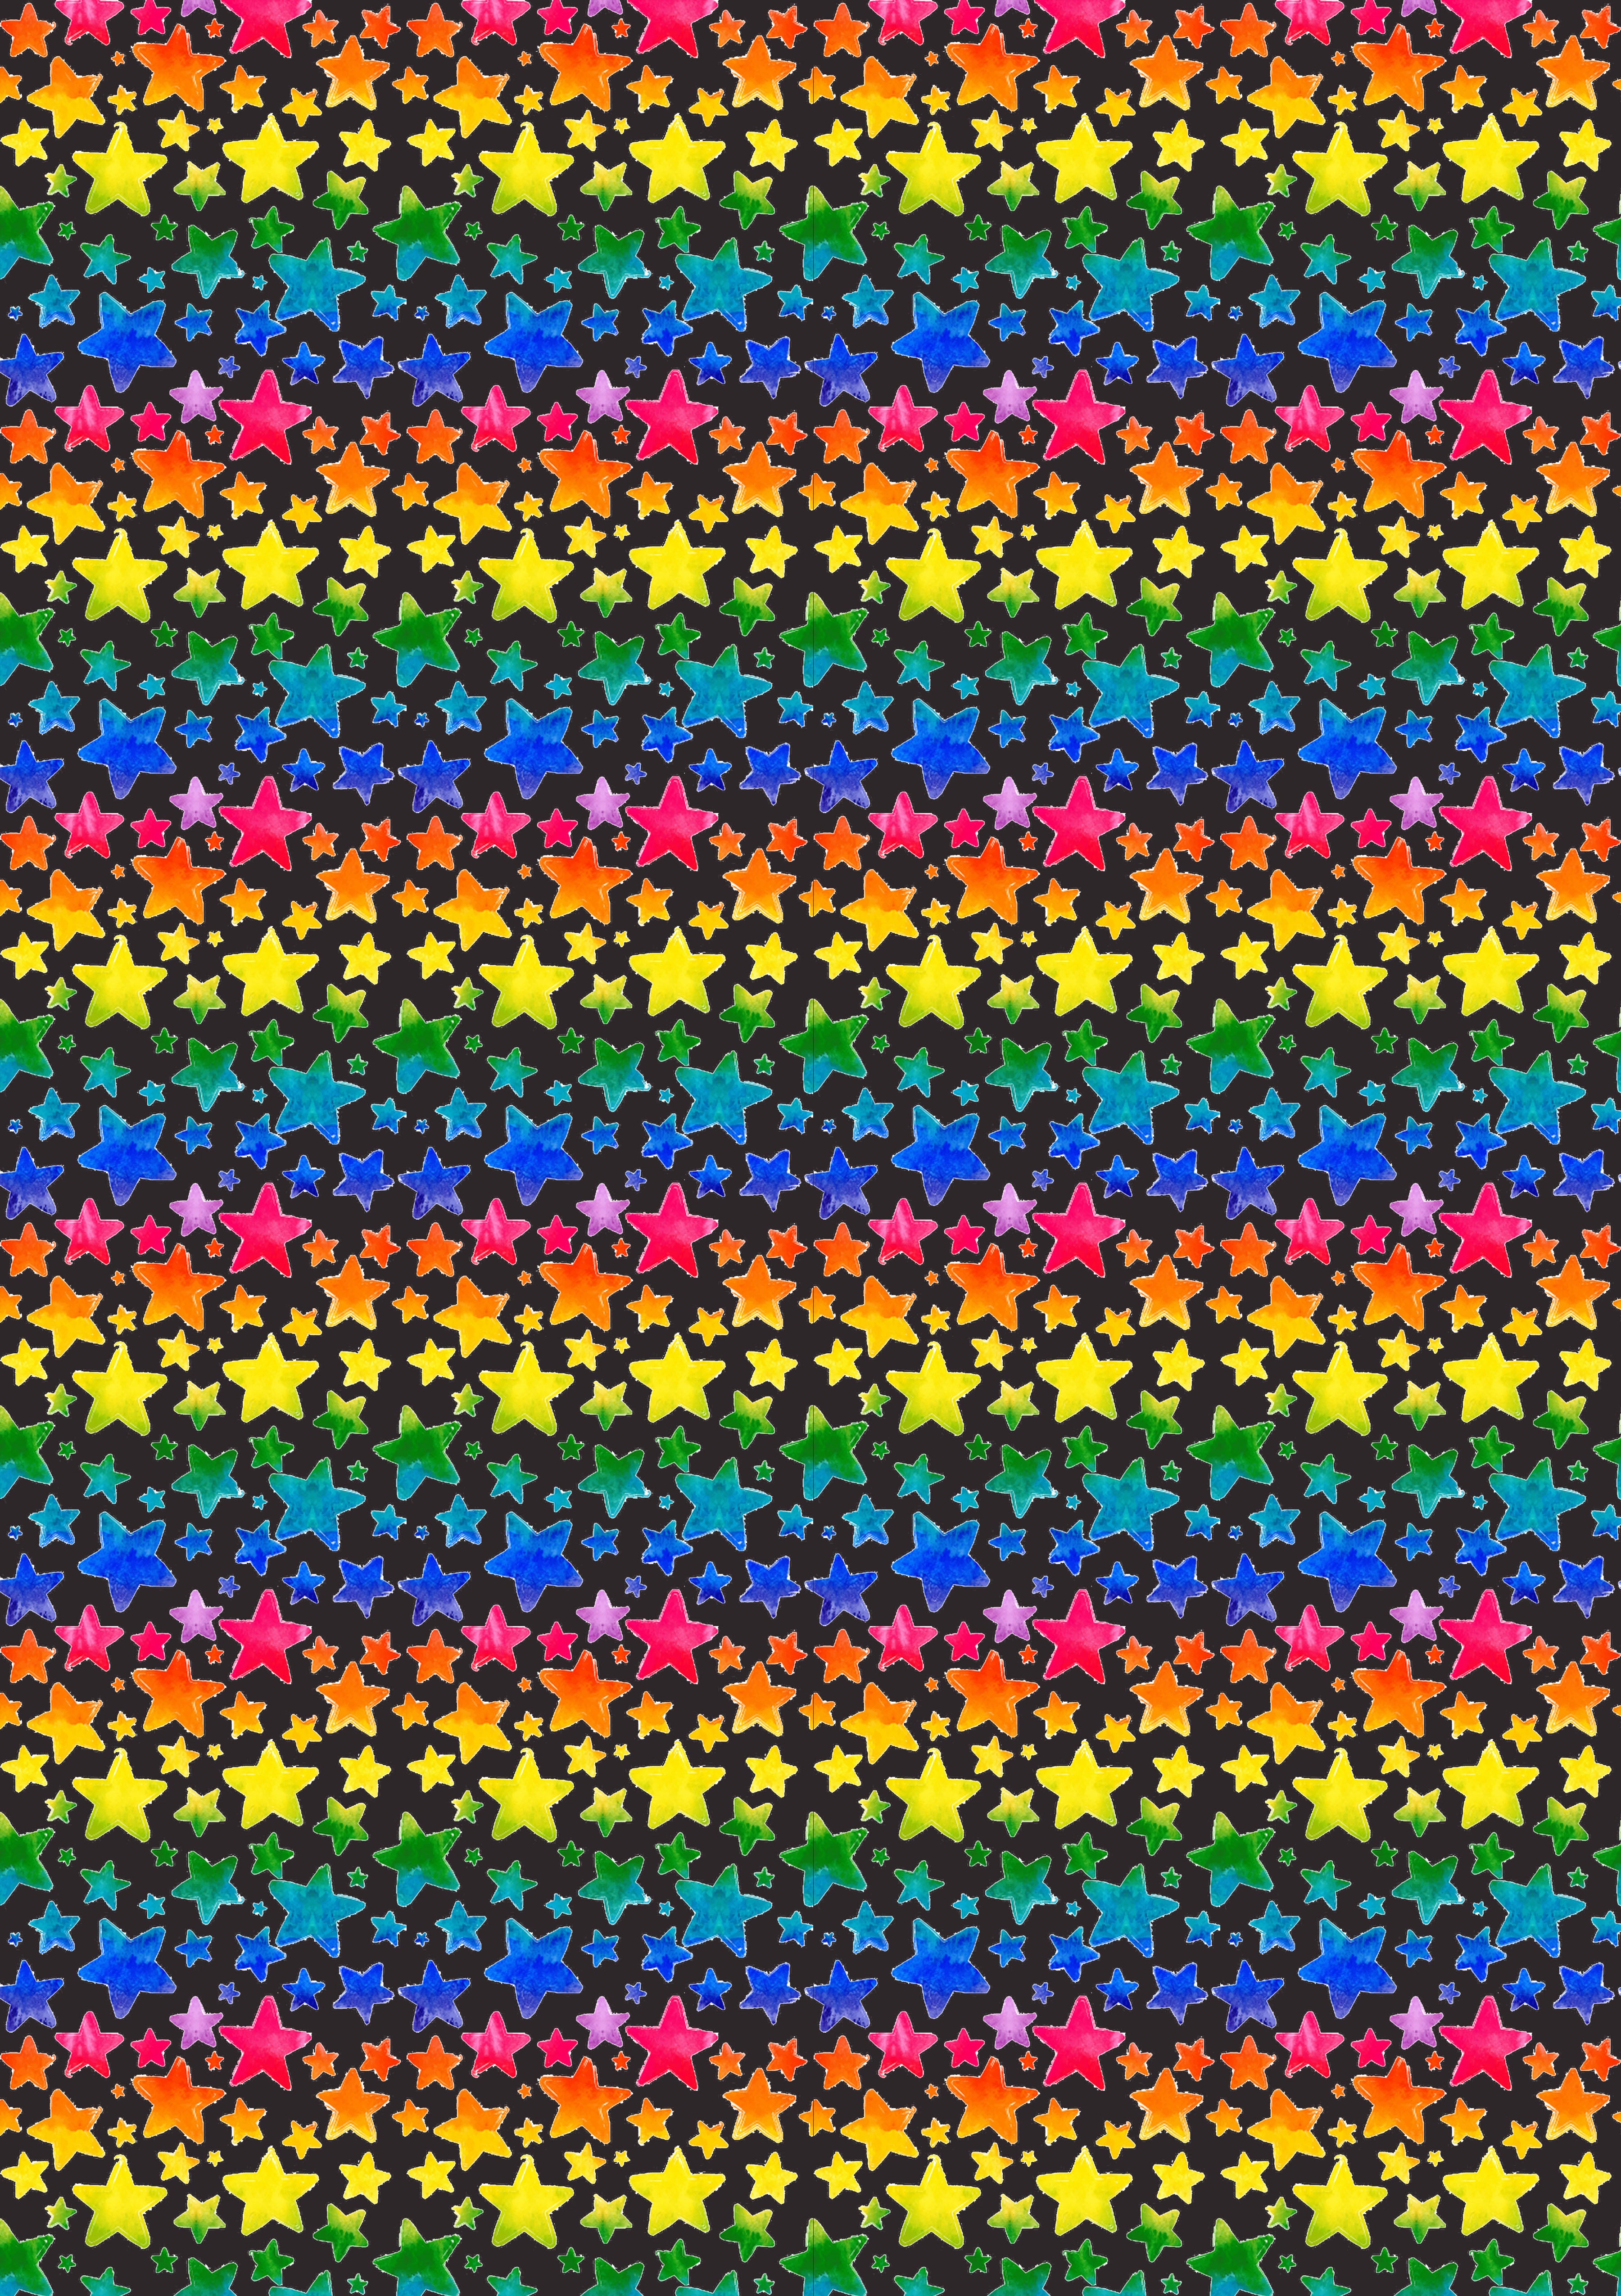 Printed Pattern Vinyl - Glossy - Rainbow / Gay Pride Stripe 12 x 12 Sheet